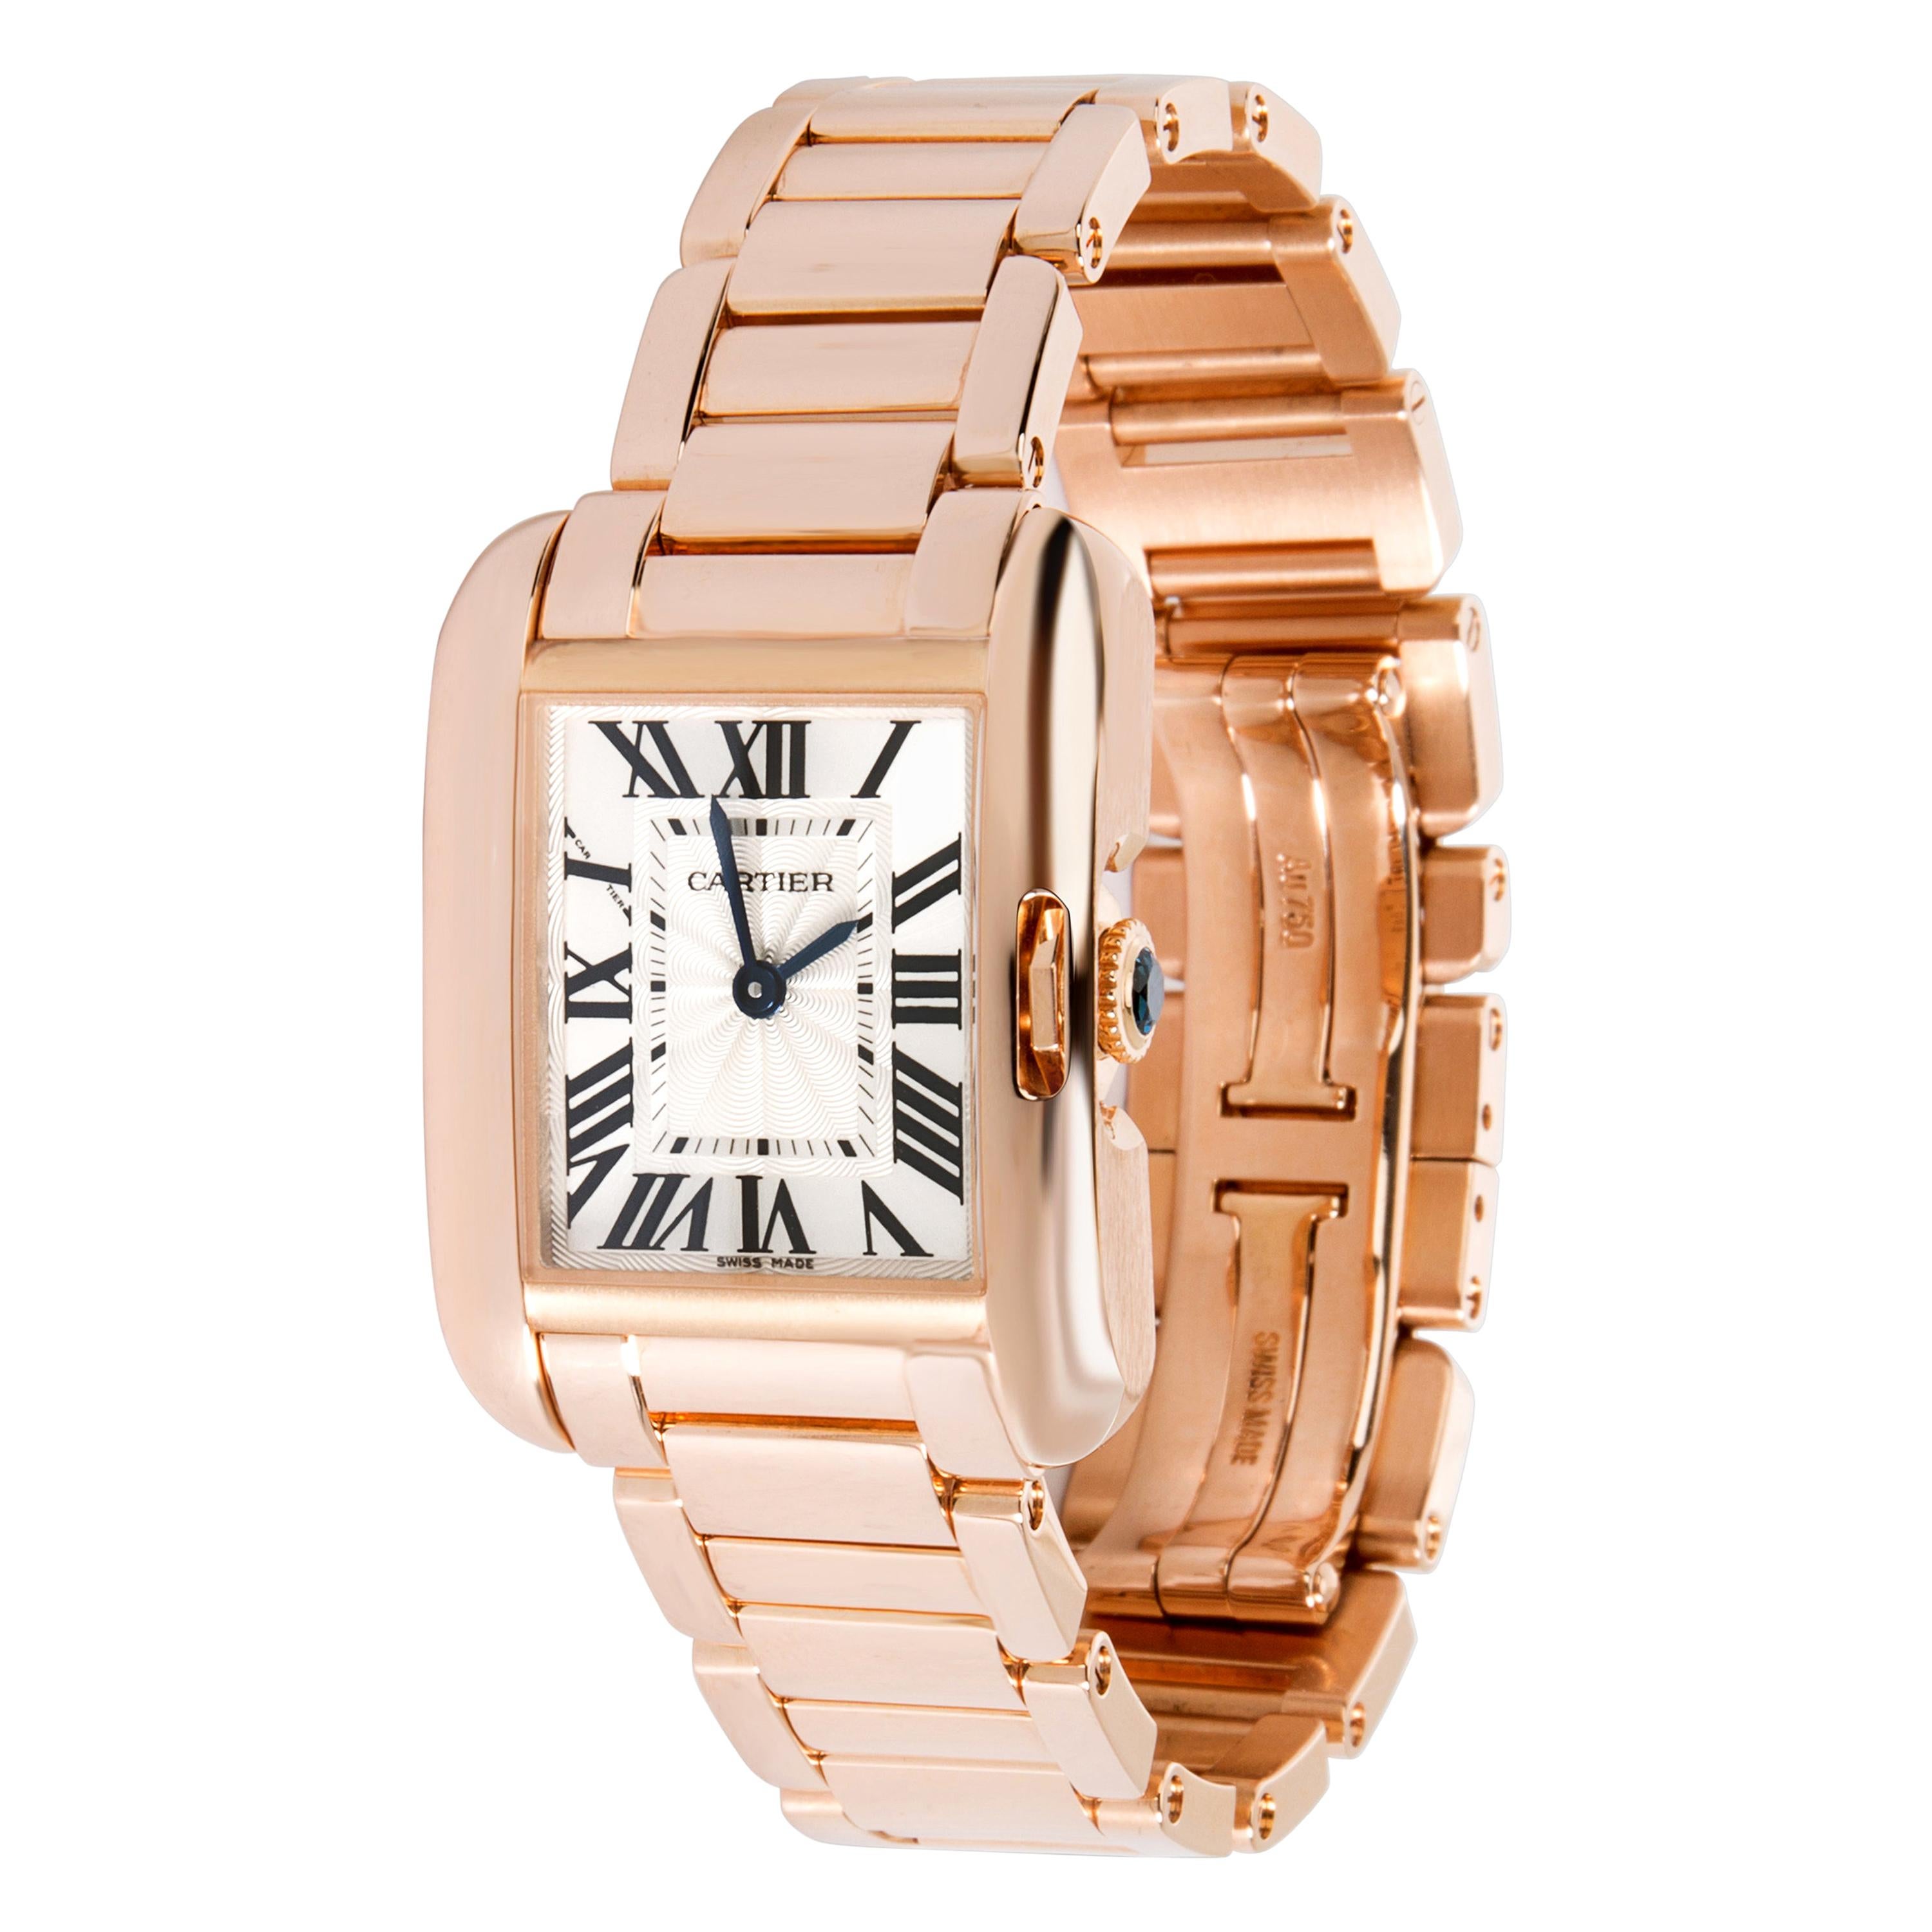 Cartier Tank Anglaise W5310013 Women's Watch in 18 Karat Rose Gold